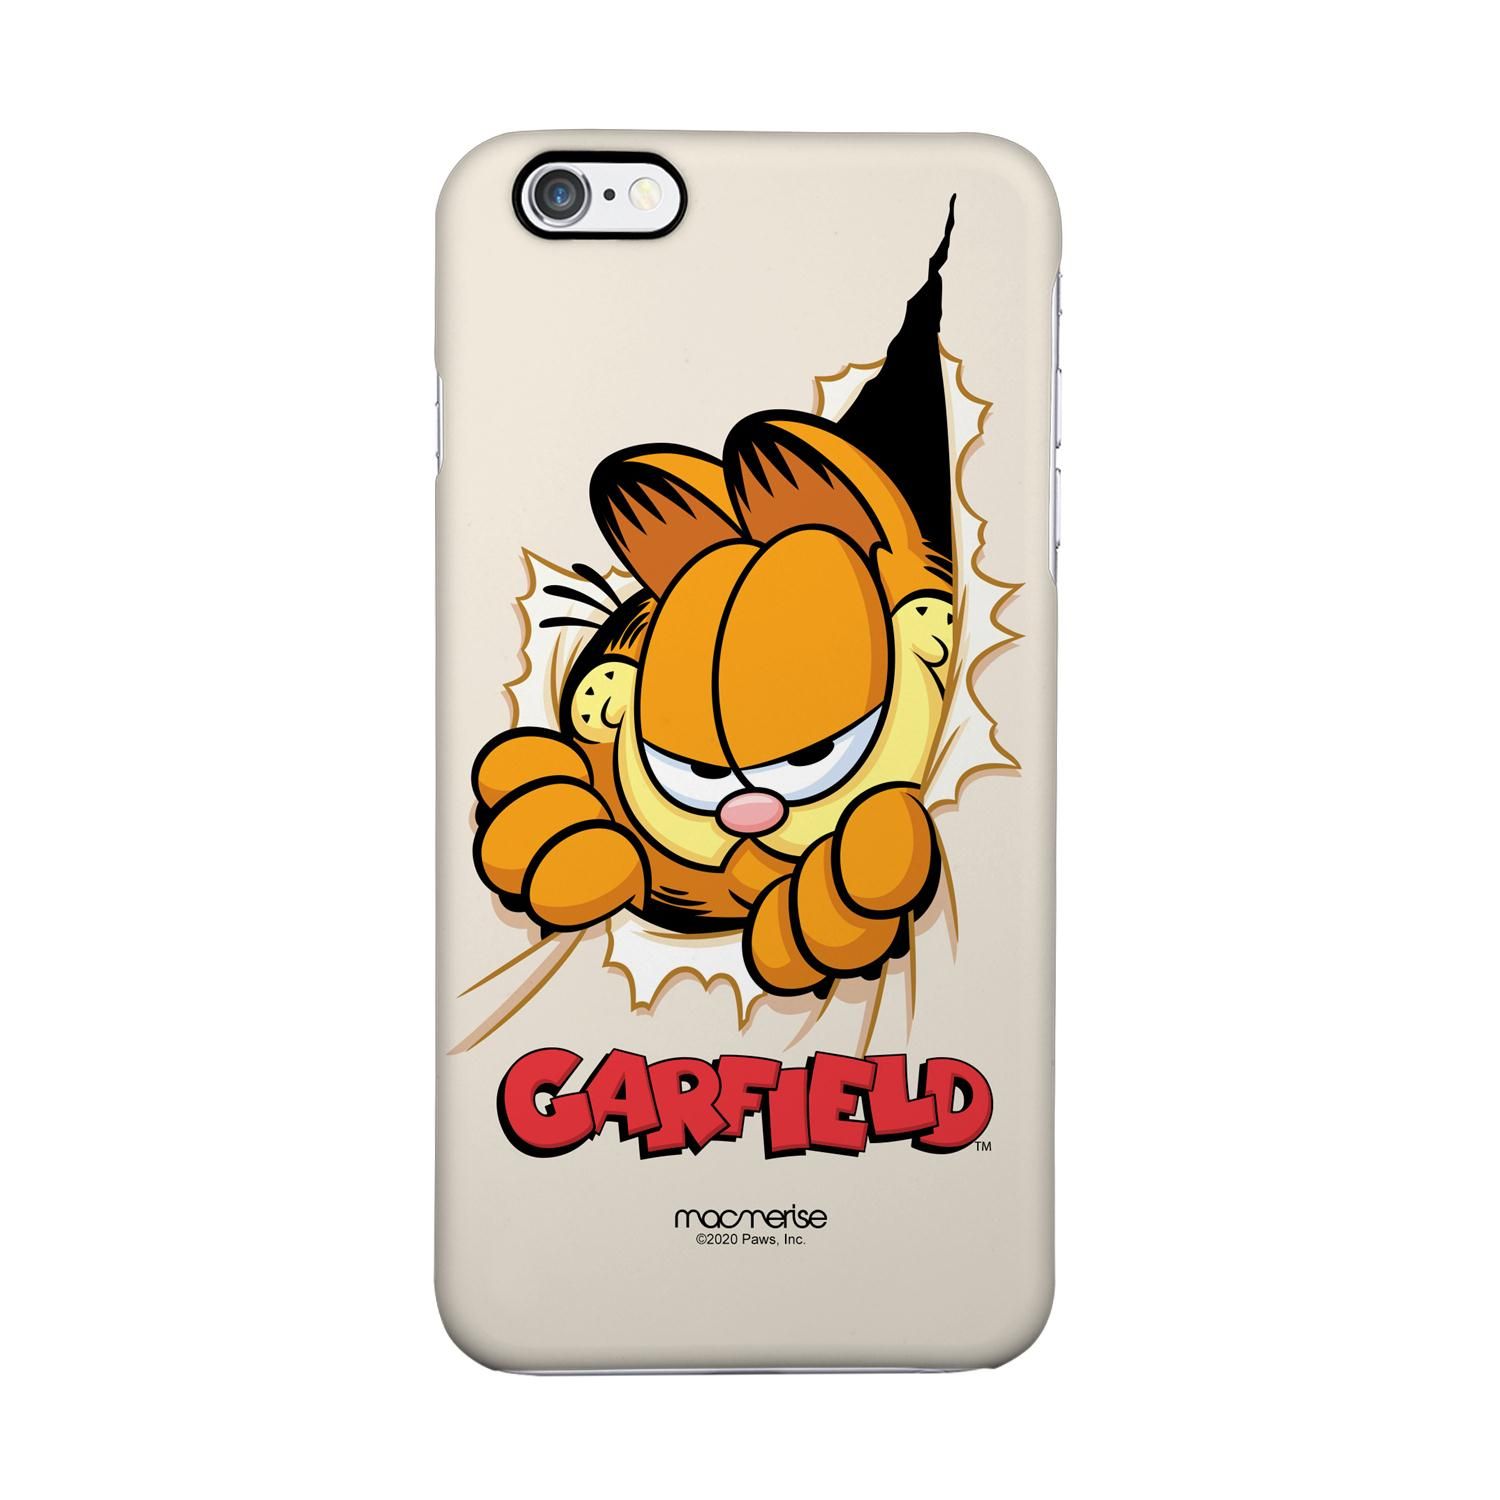 Heres Garfield - Sleek Case for iPhone 6 Plus